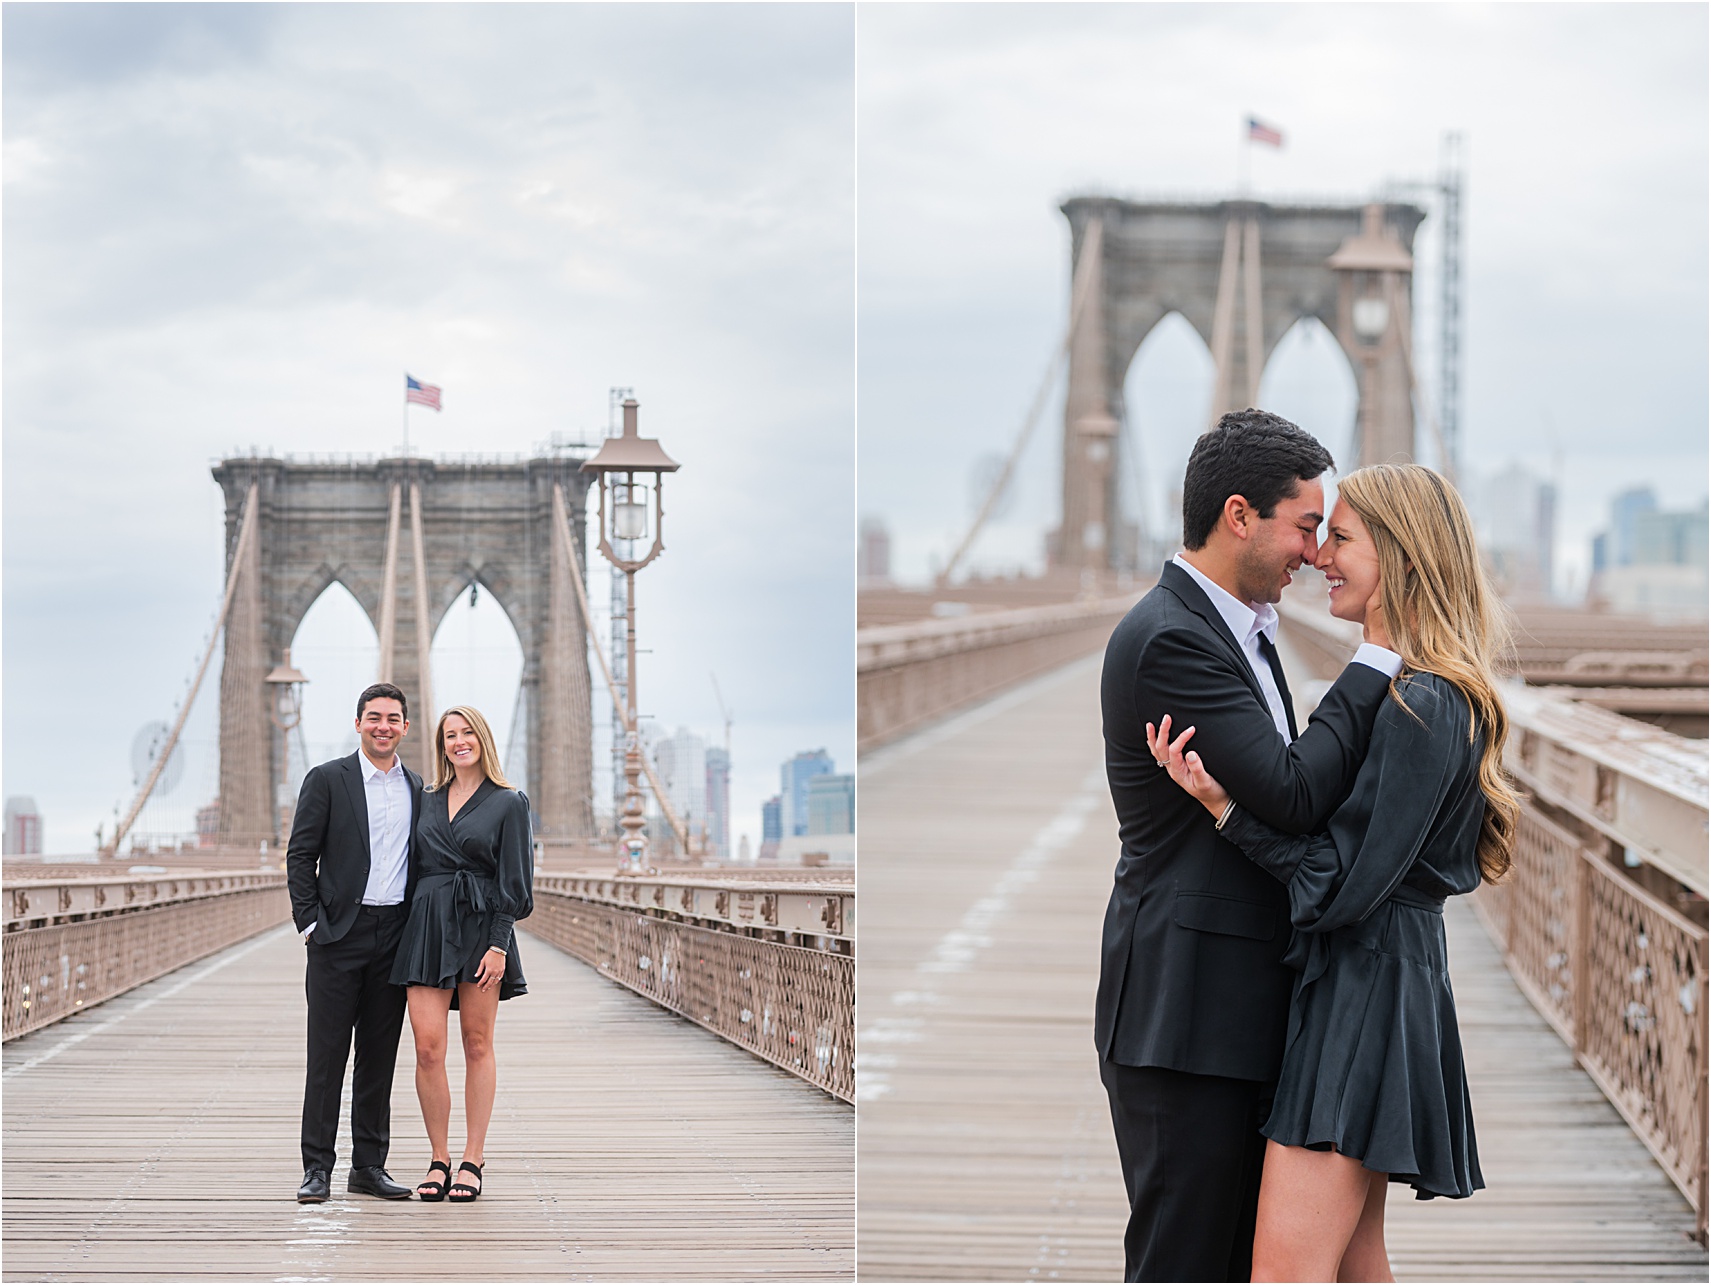 couple on the Brooklyn Bridge